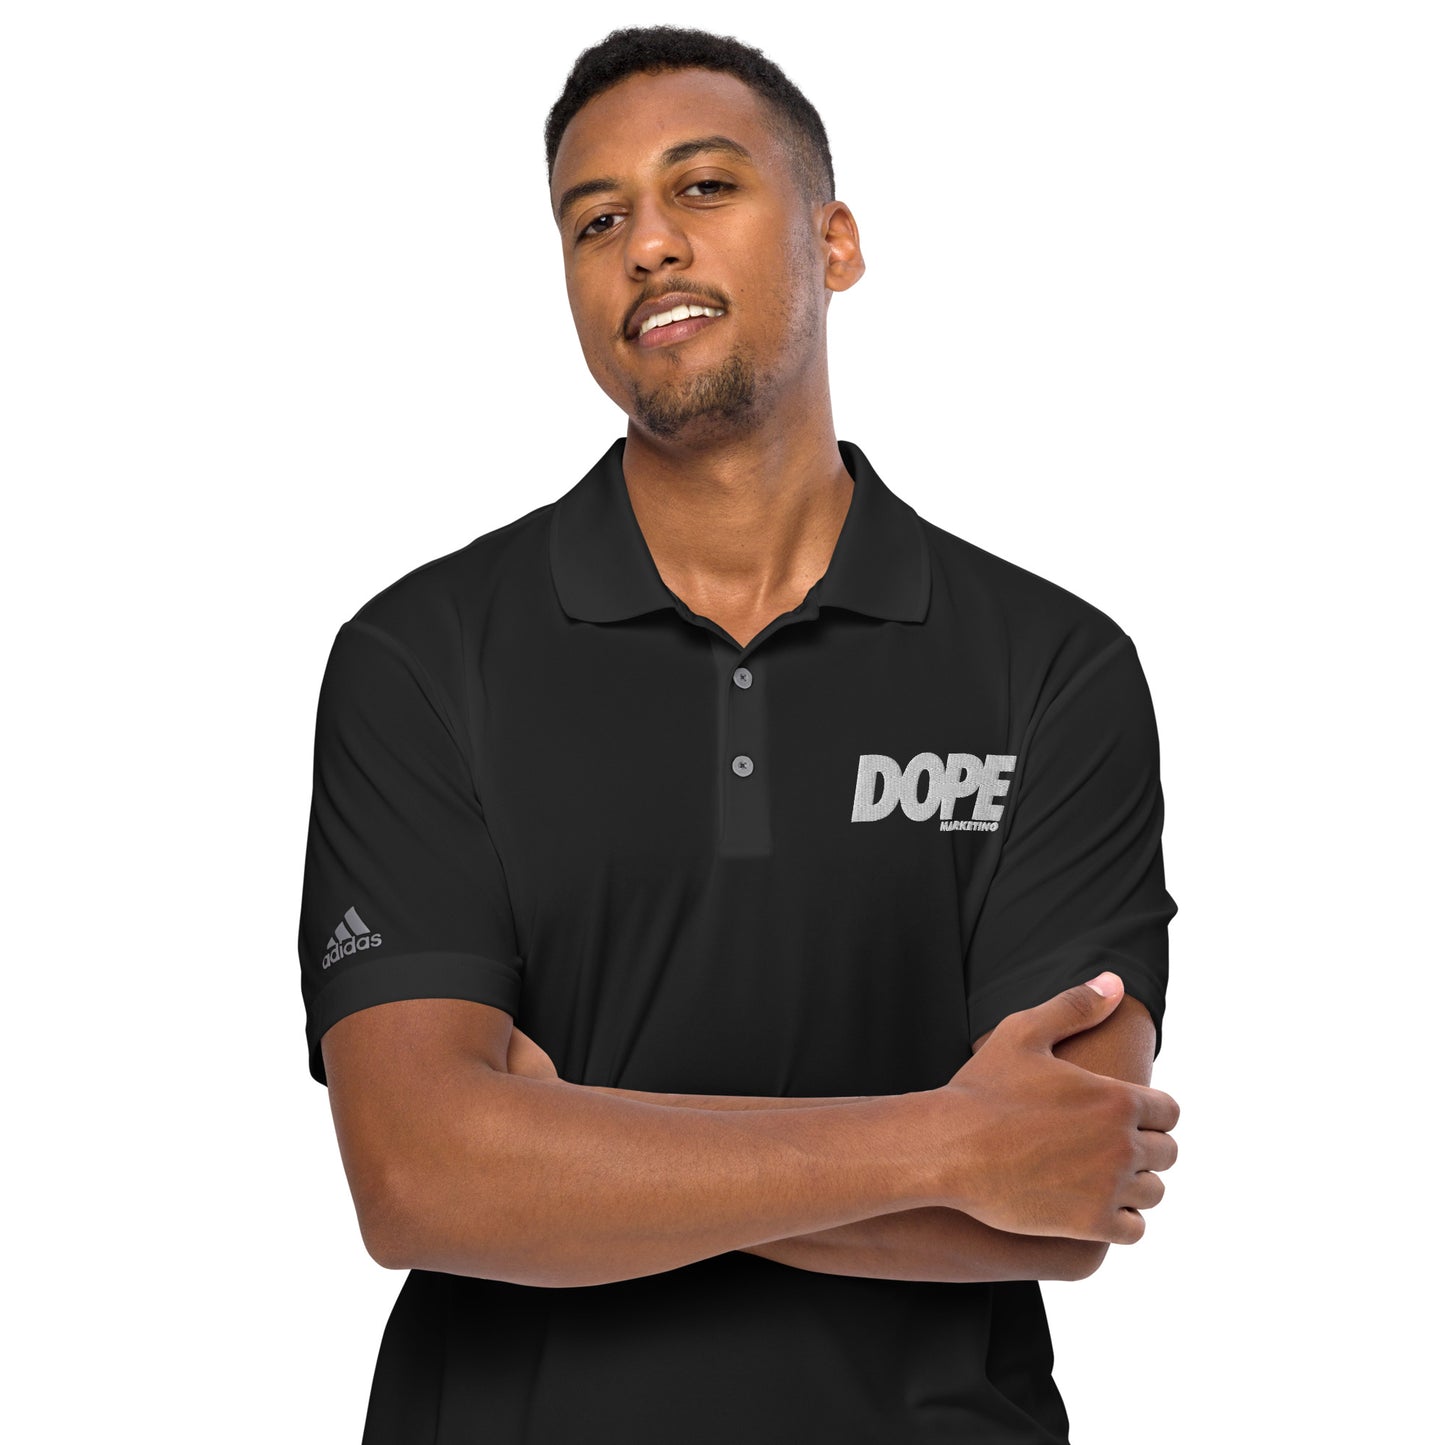 Adidas Performance Polo Shirt- DOPE Logo